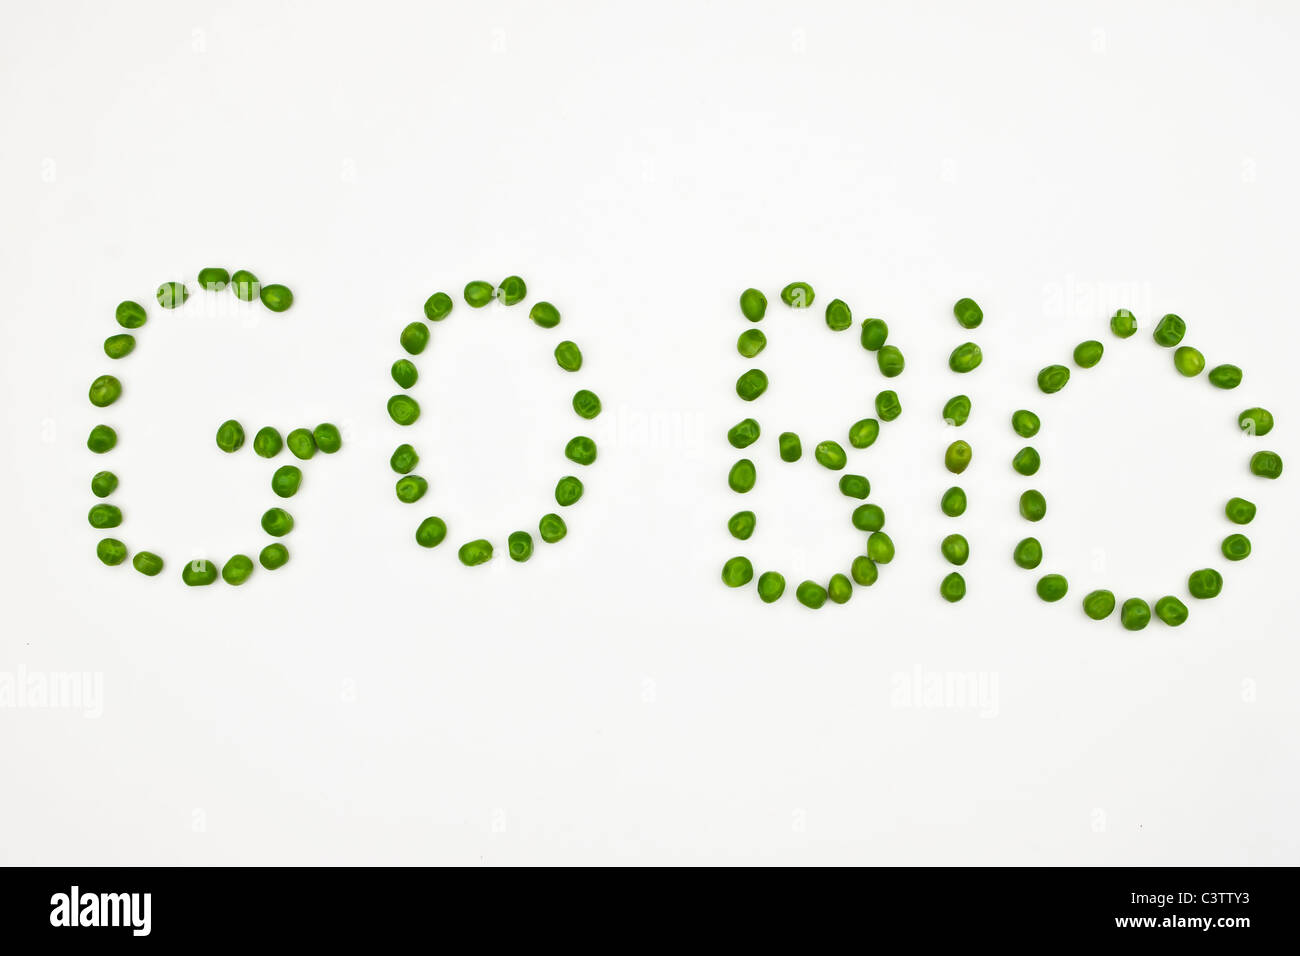 peas which are writing 'Go Bio' Stock Photo